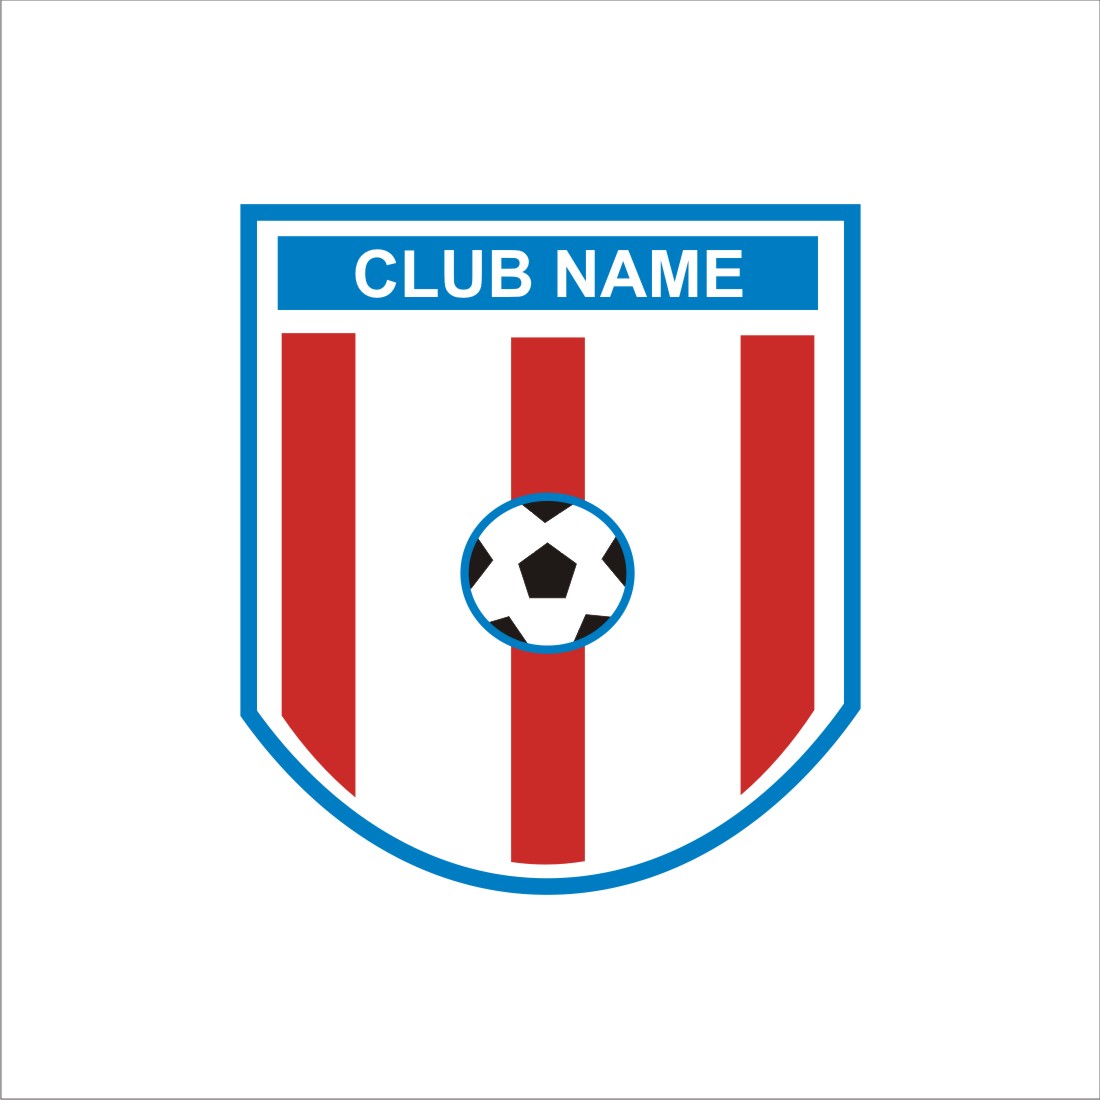 club logo cover image.